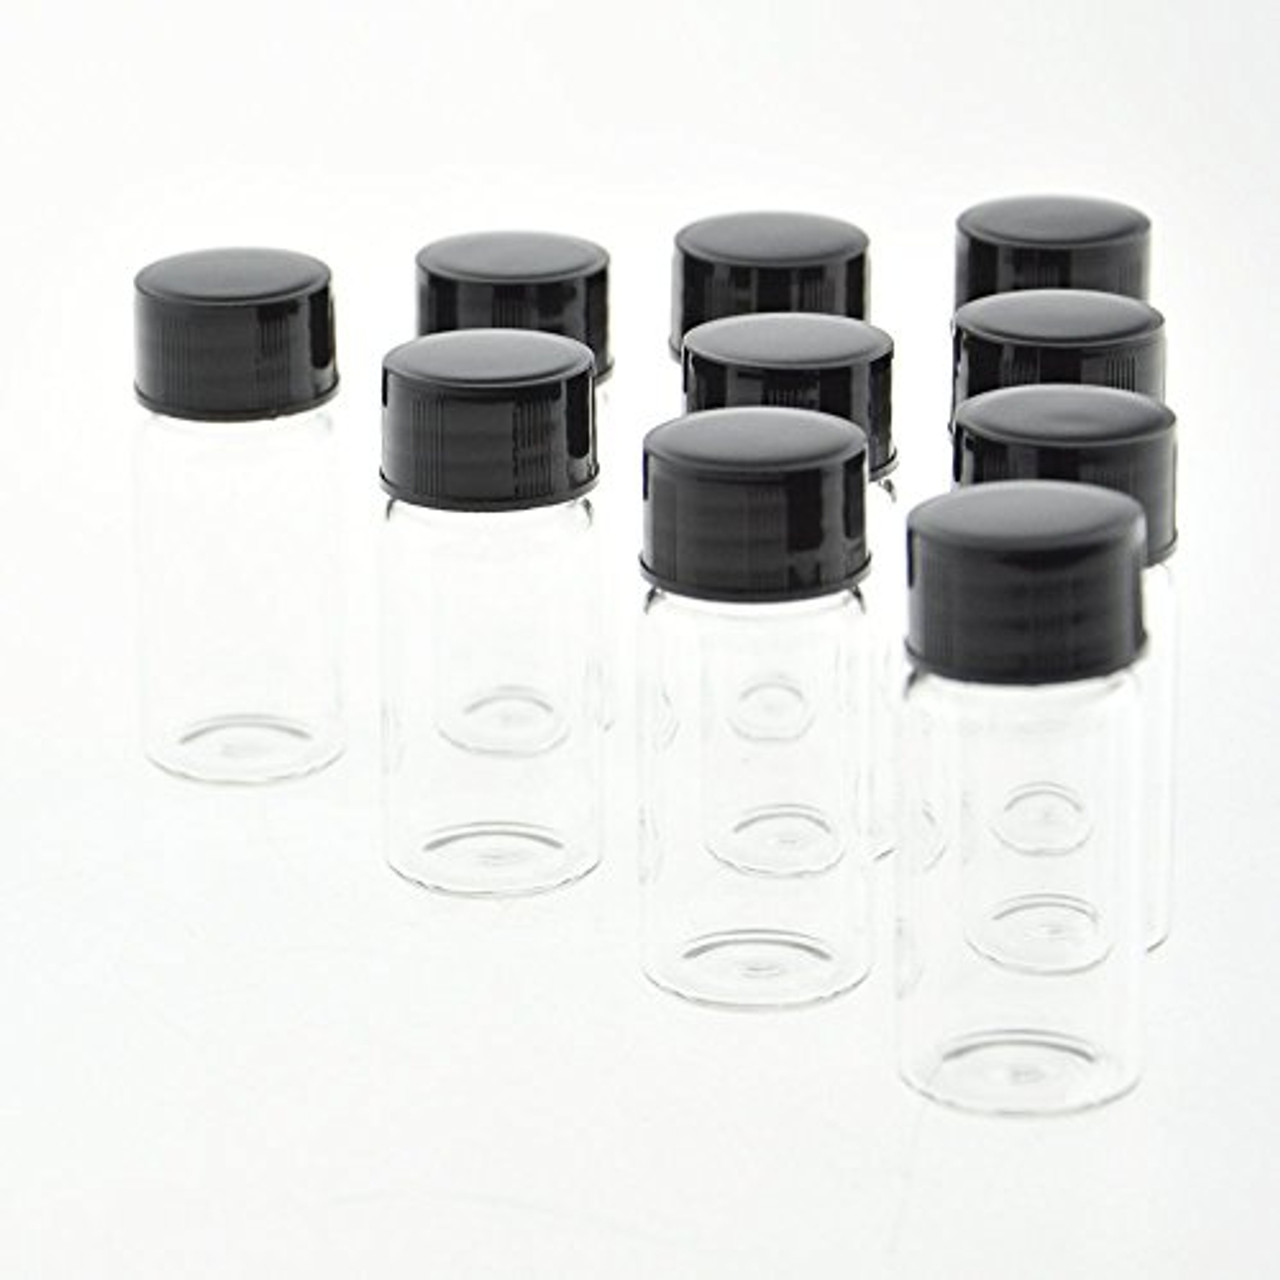 Storage Vial, Clear Liquid Sampling Sample Glass Thread Bottles, Capacity  10ml (1/3 Oz) with 18-400 Black Screw cap, PE Liner, Pack of 100 by ALWSCI